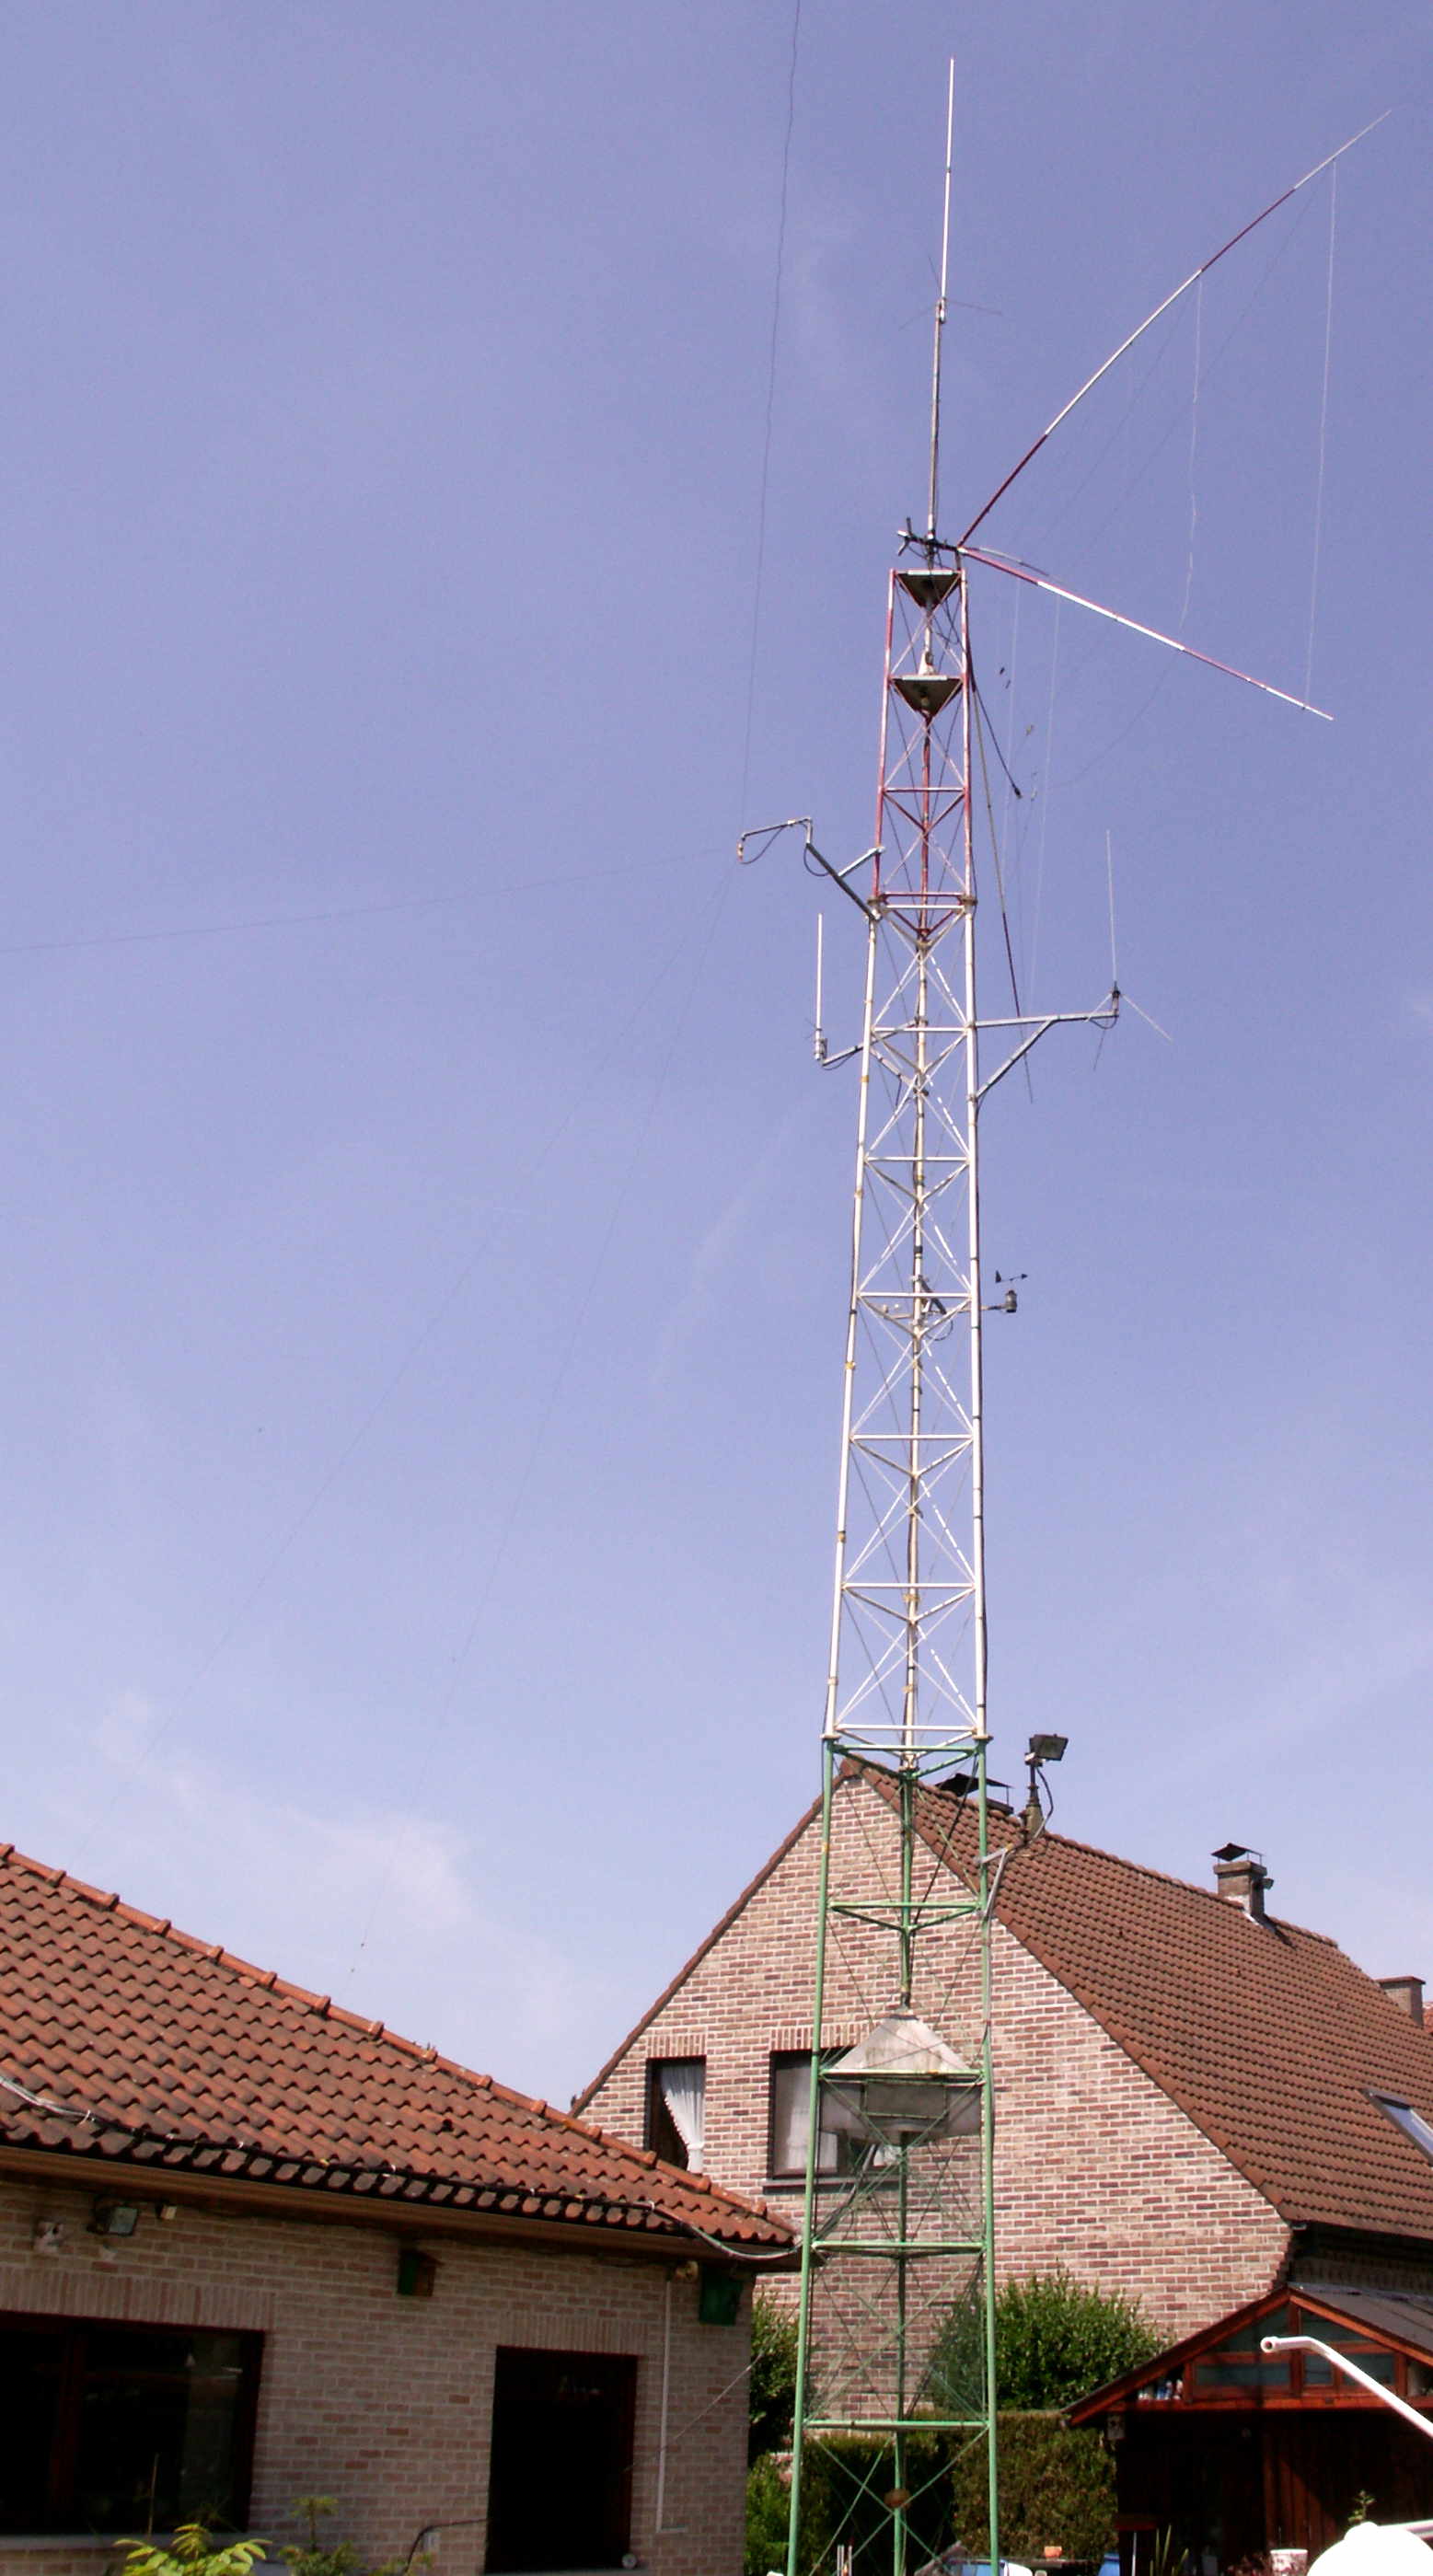 Radio masts and towers